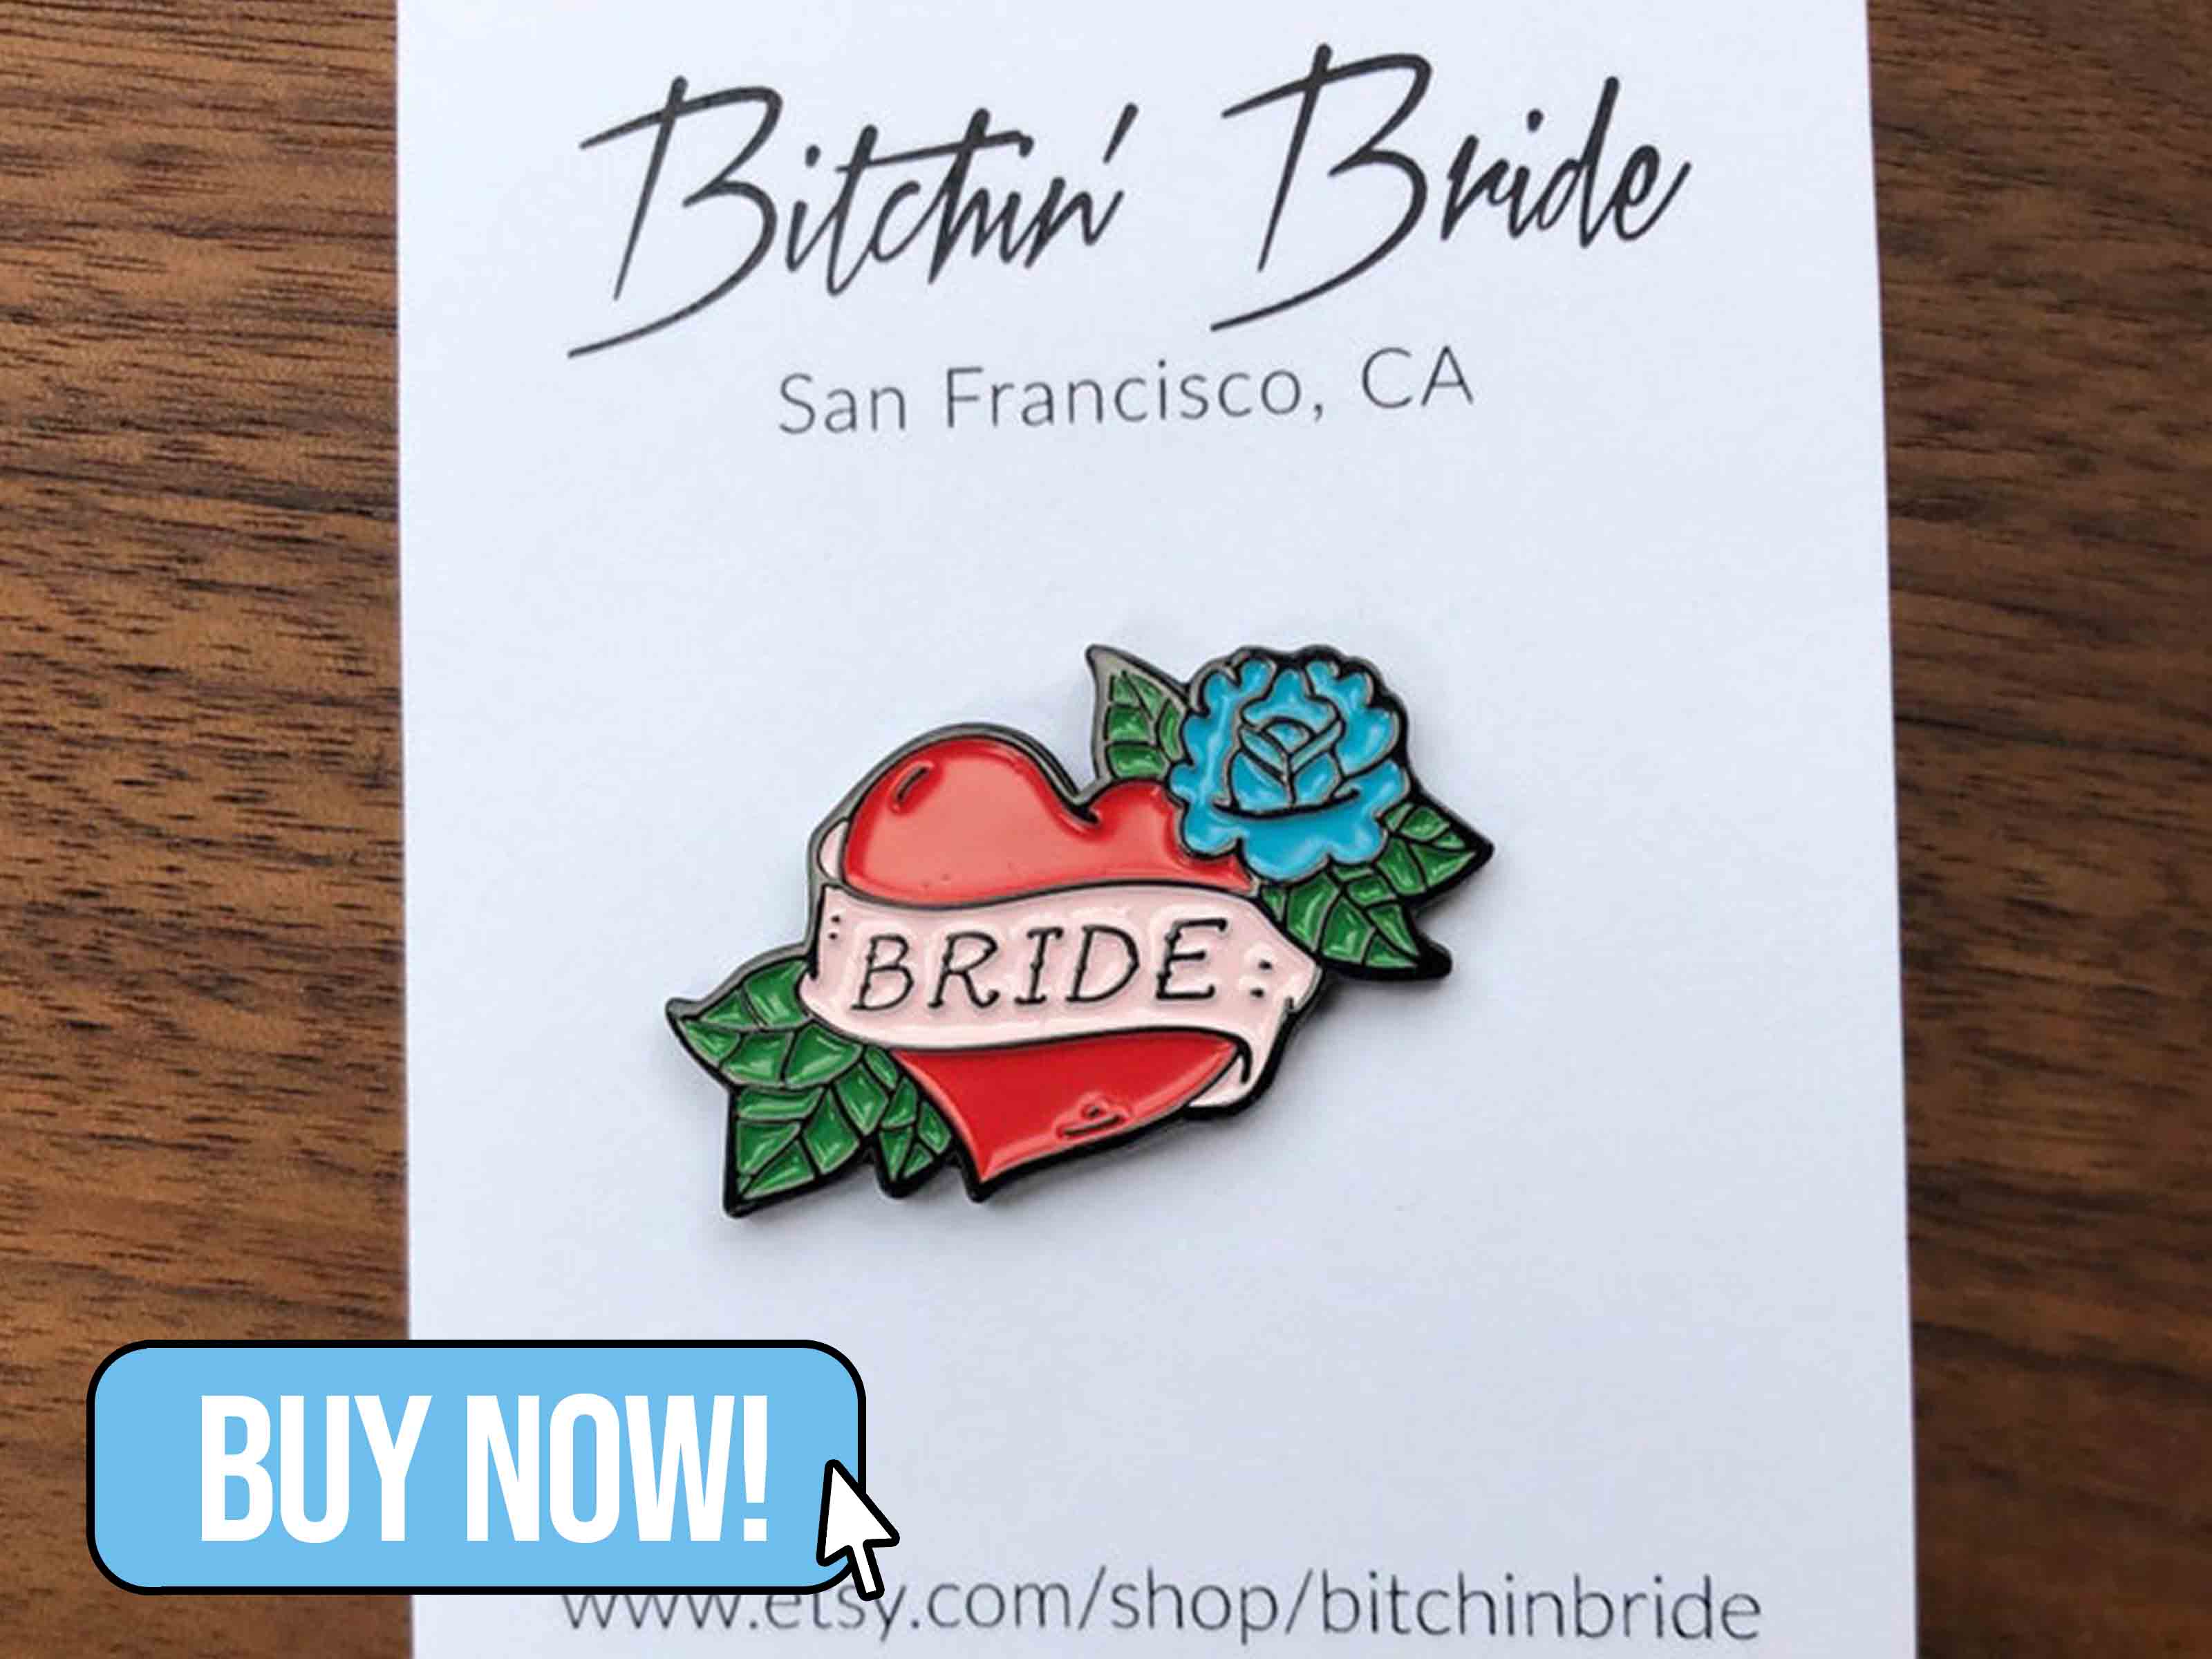 Bride Tattoo Pin Badge - bitchinbride